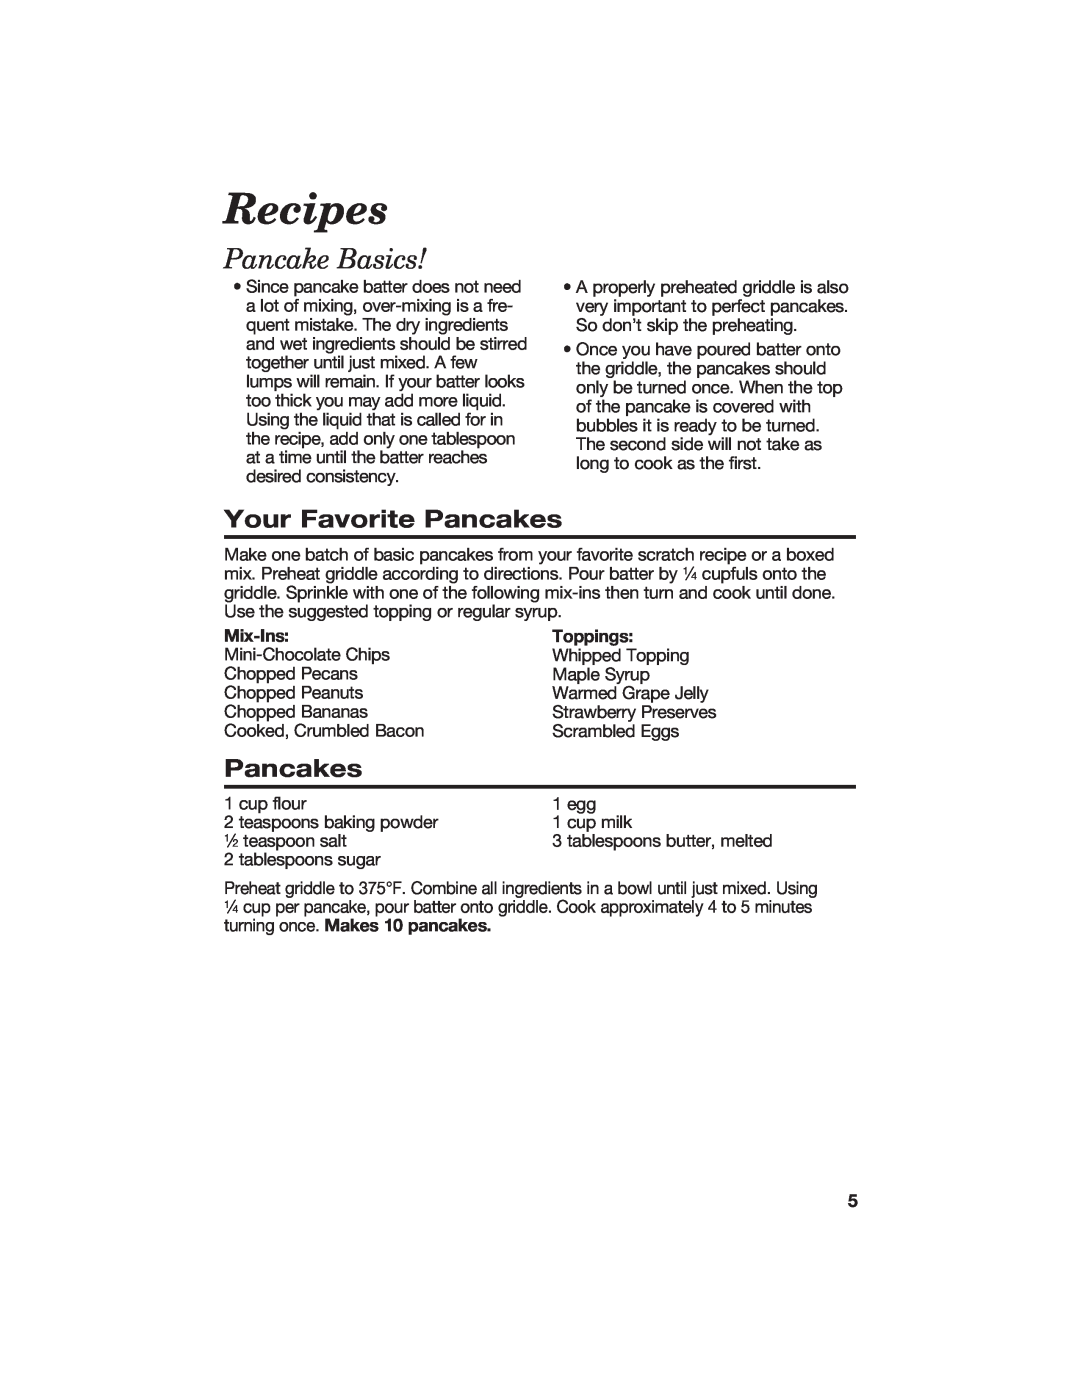 Hamilton Beach 840098400 manual Recipes, Your Favorite Pancakes, Mix-Ins, Toppings, Pancake Basics 